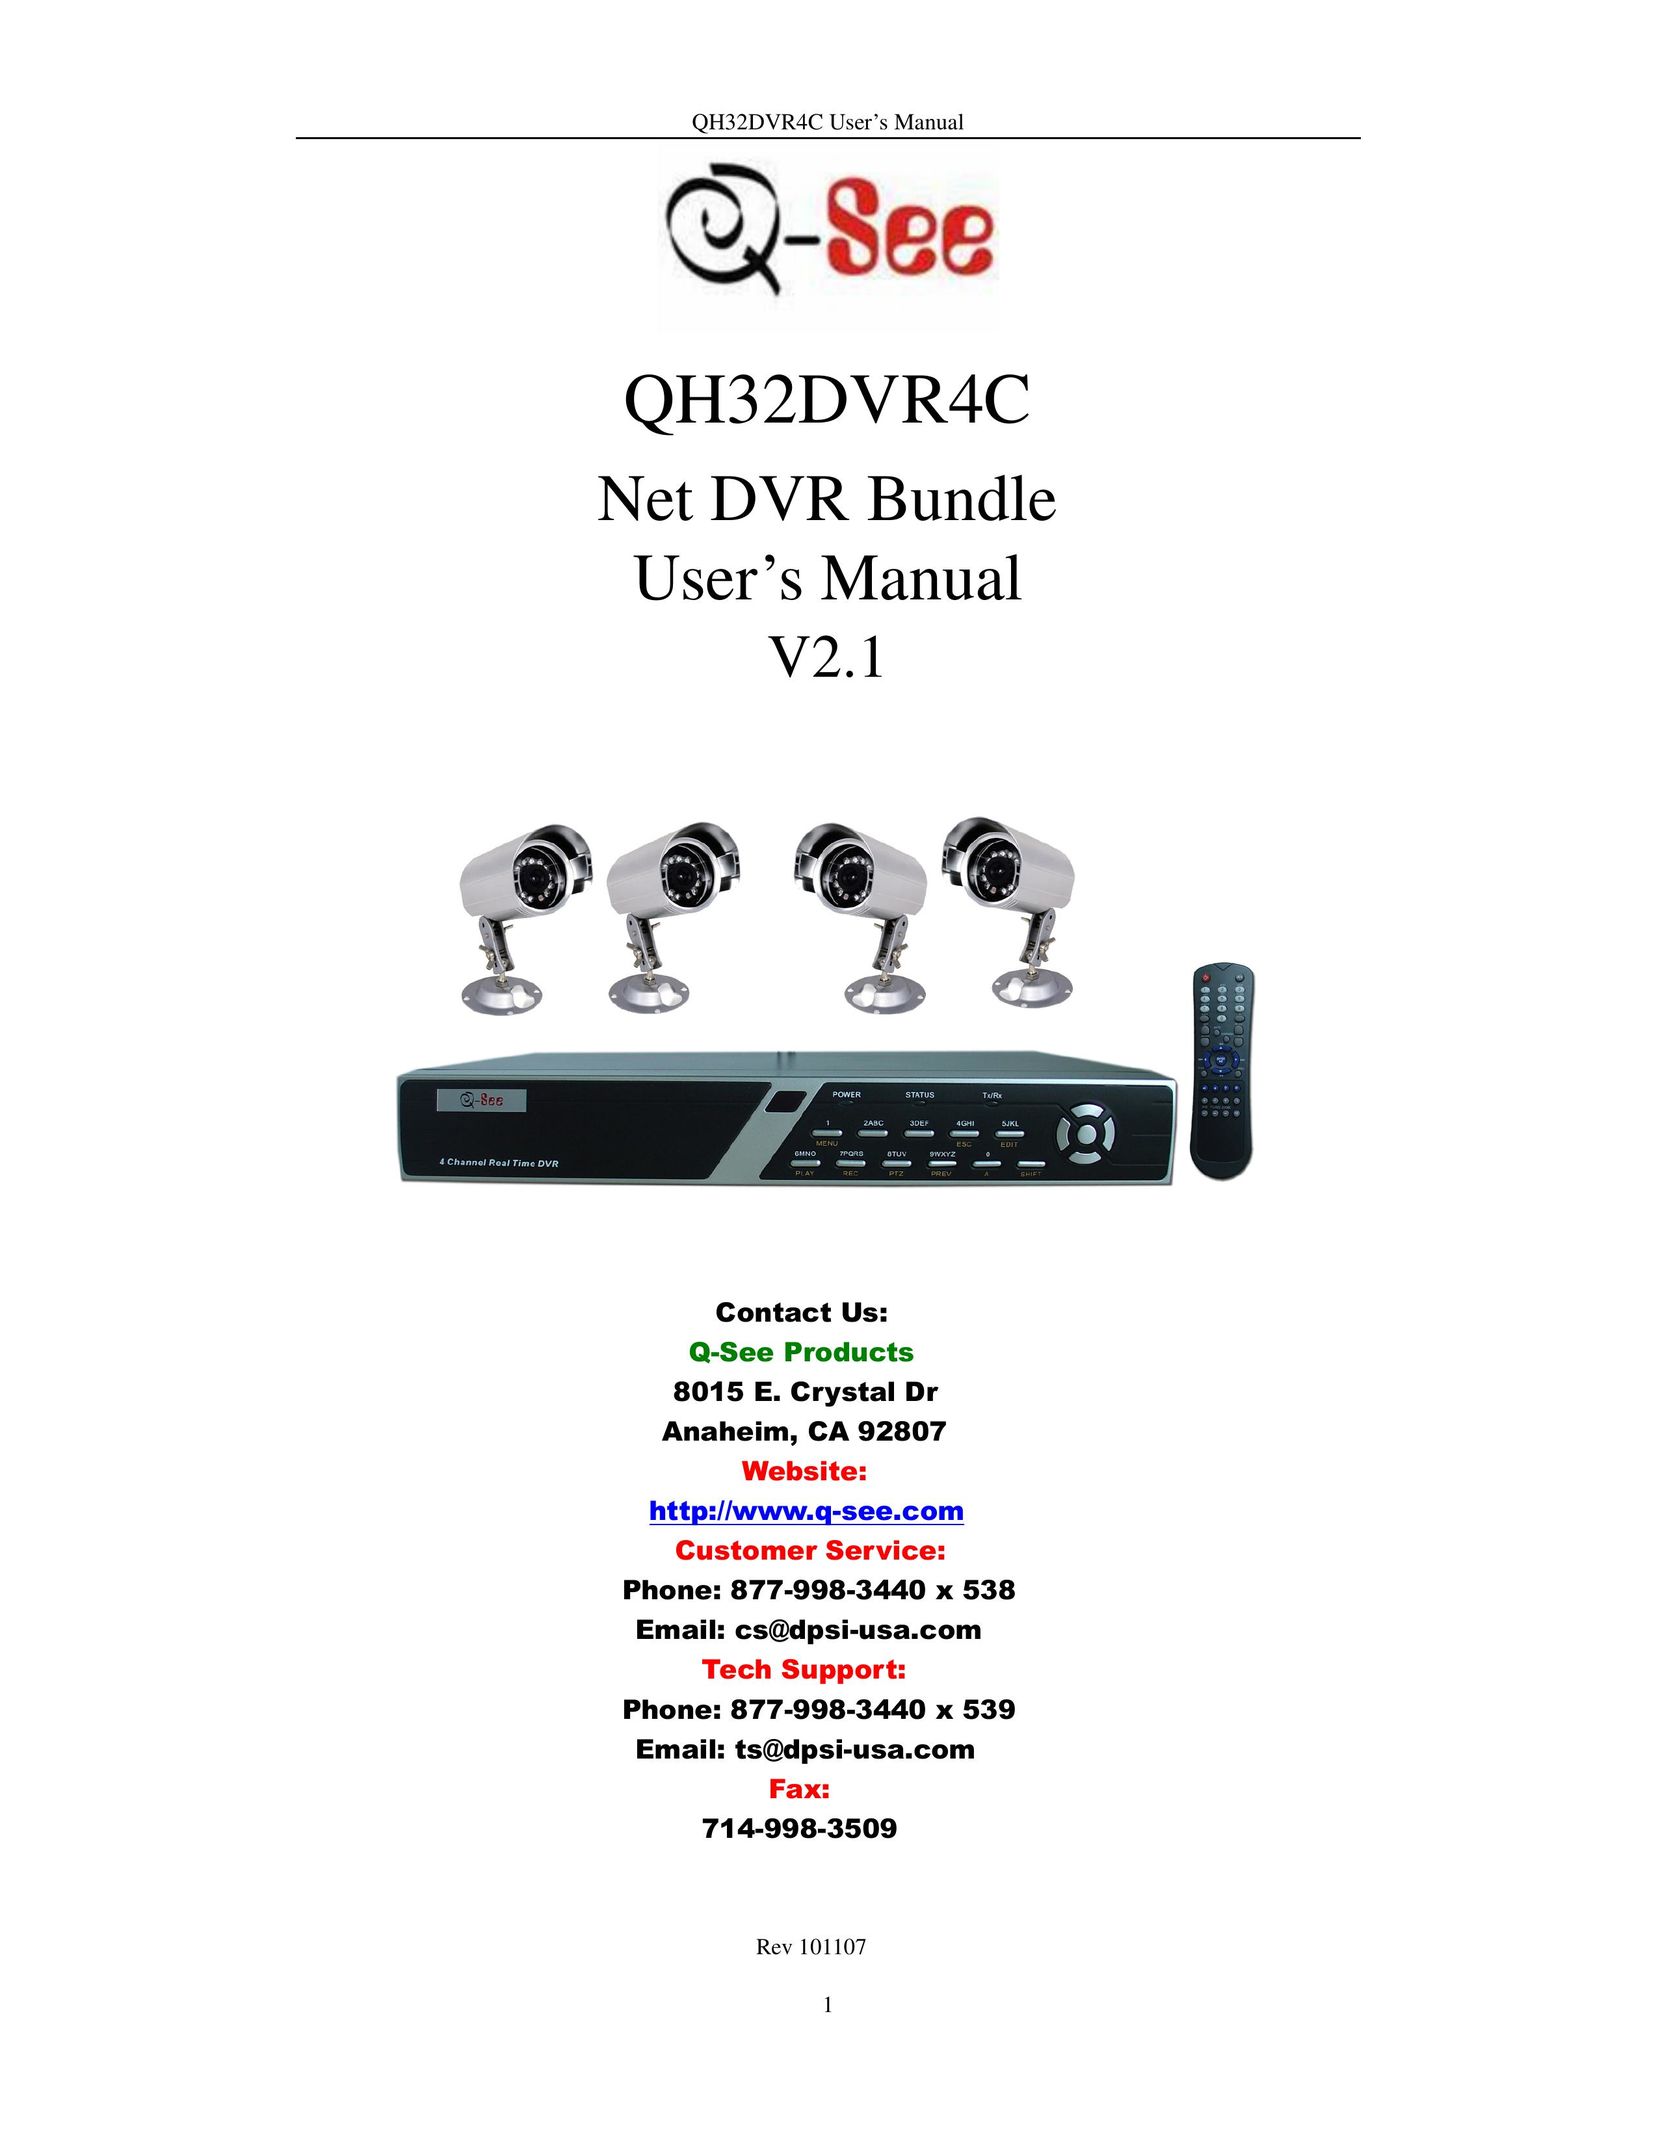 Q-See QH32DVR4C Cell Phone User Manual